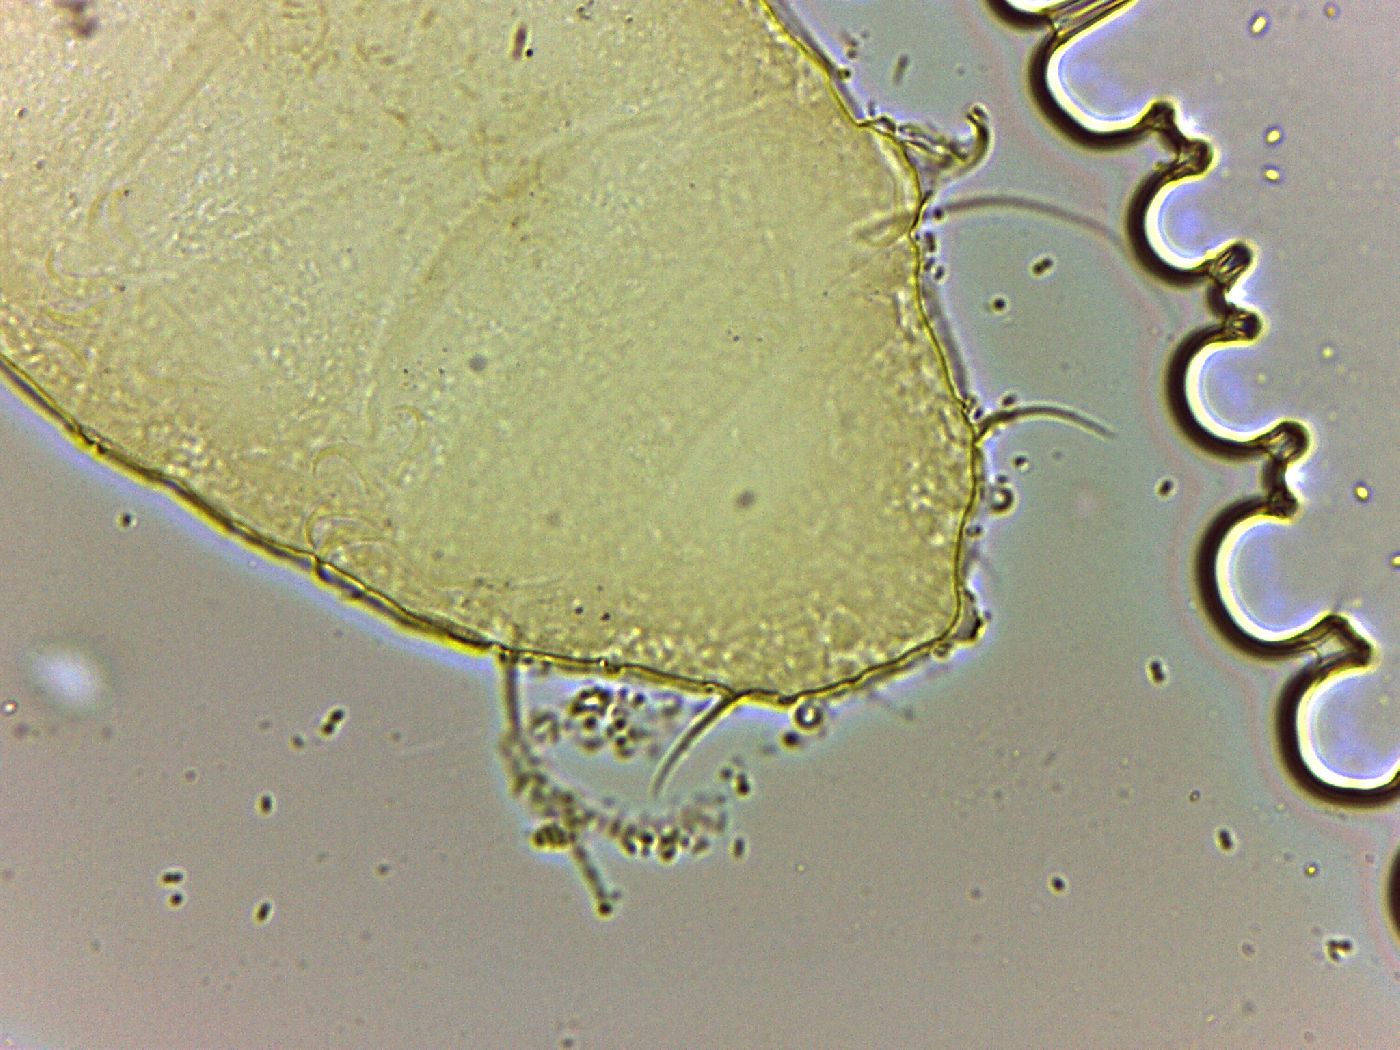 Bryodelphax parvulus image